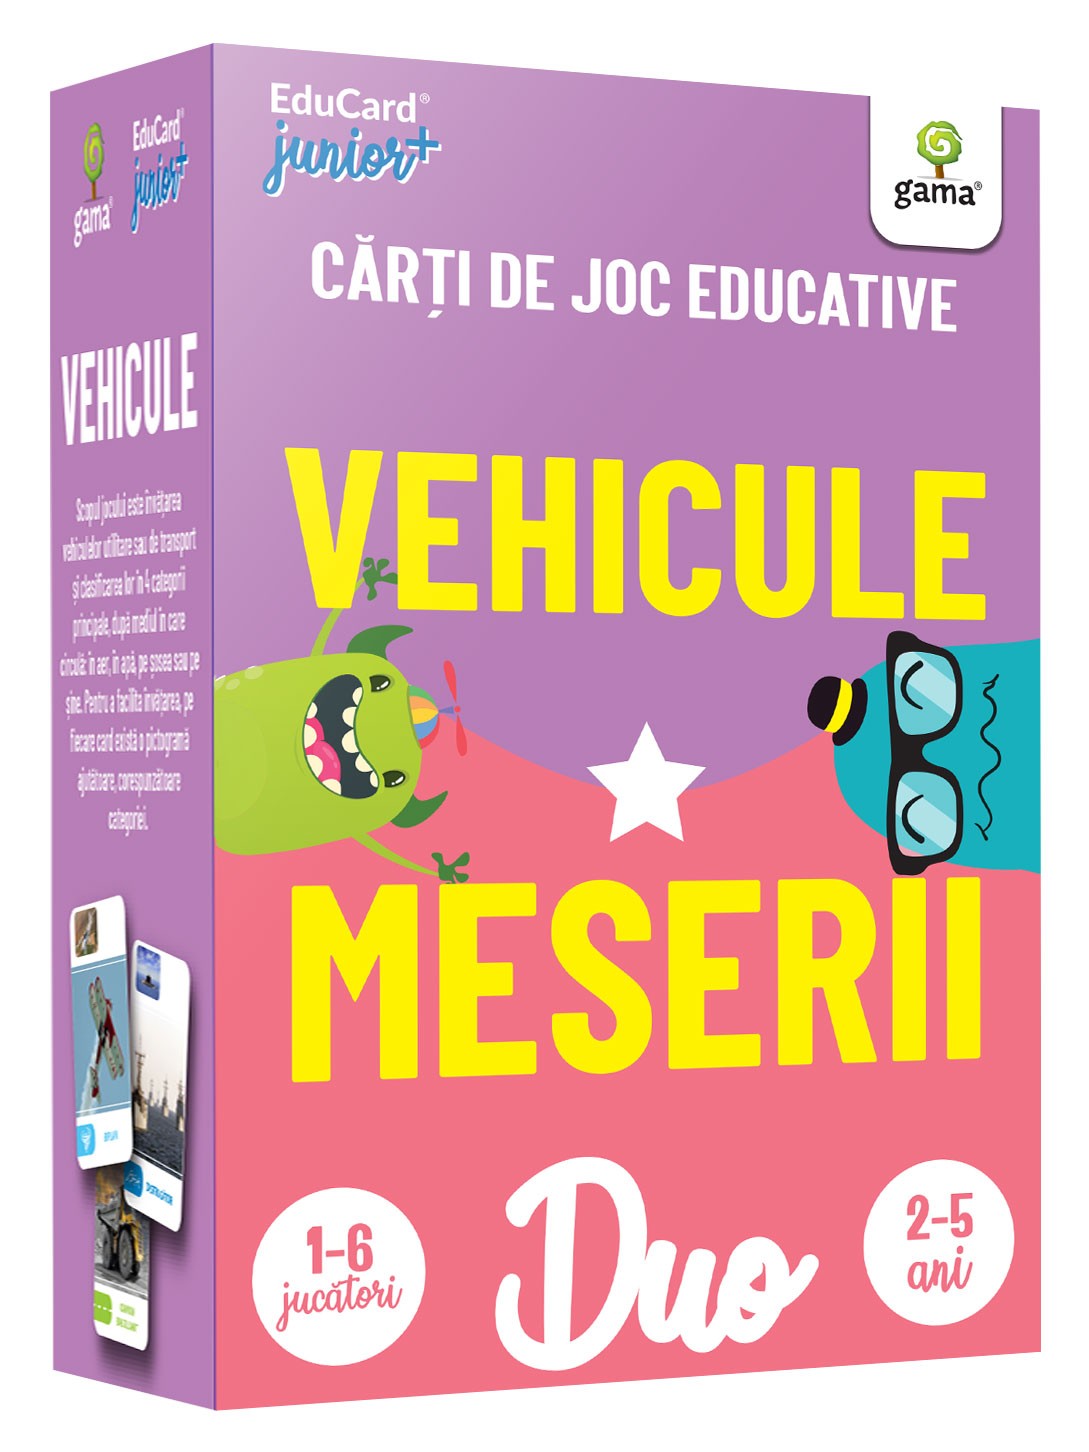 DuoCard - Vehicule • Meserii